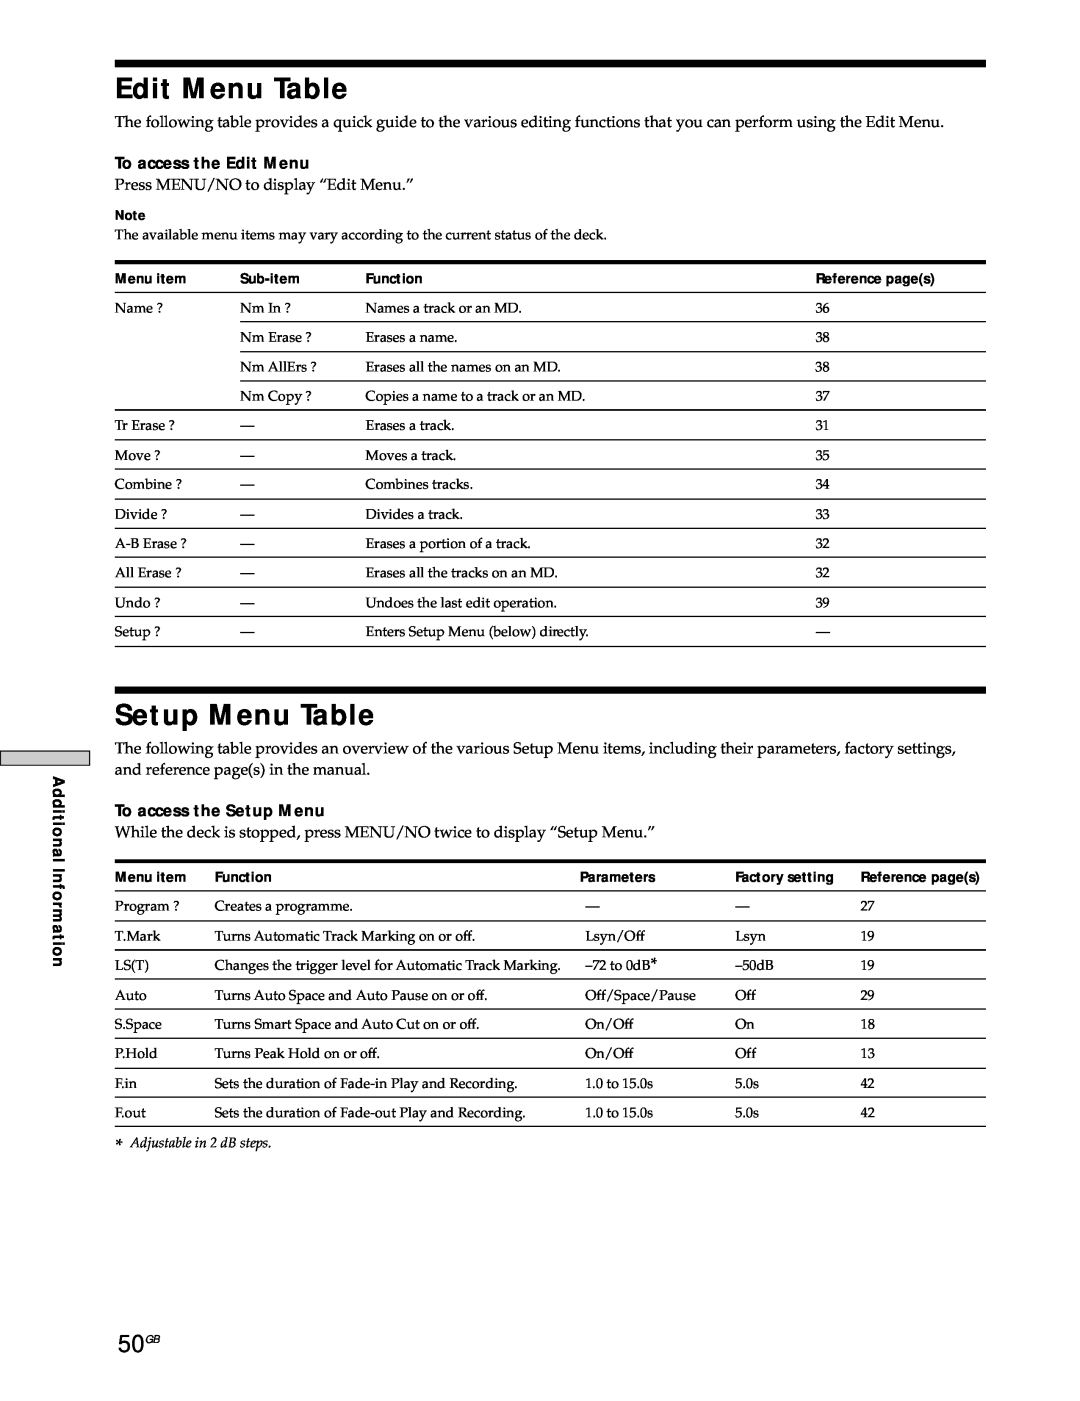 Sony MDS-JE530 manual Edit Menu Table, Setup Menu Table, 50GB 